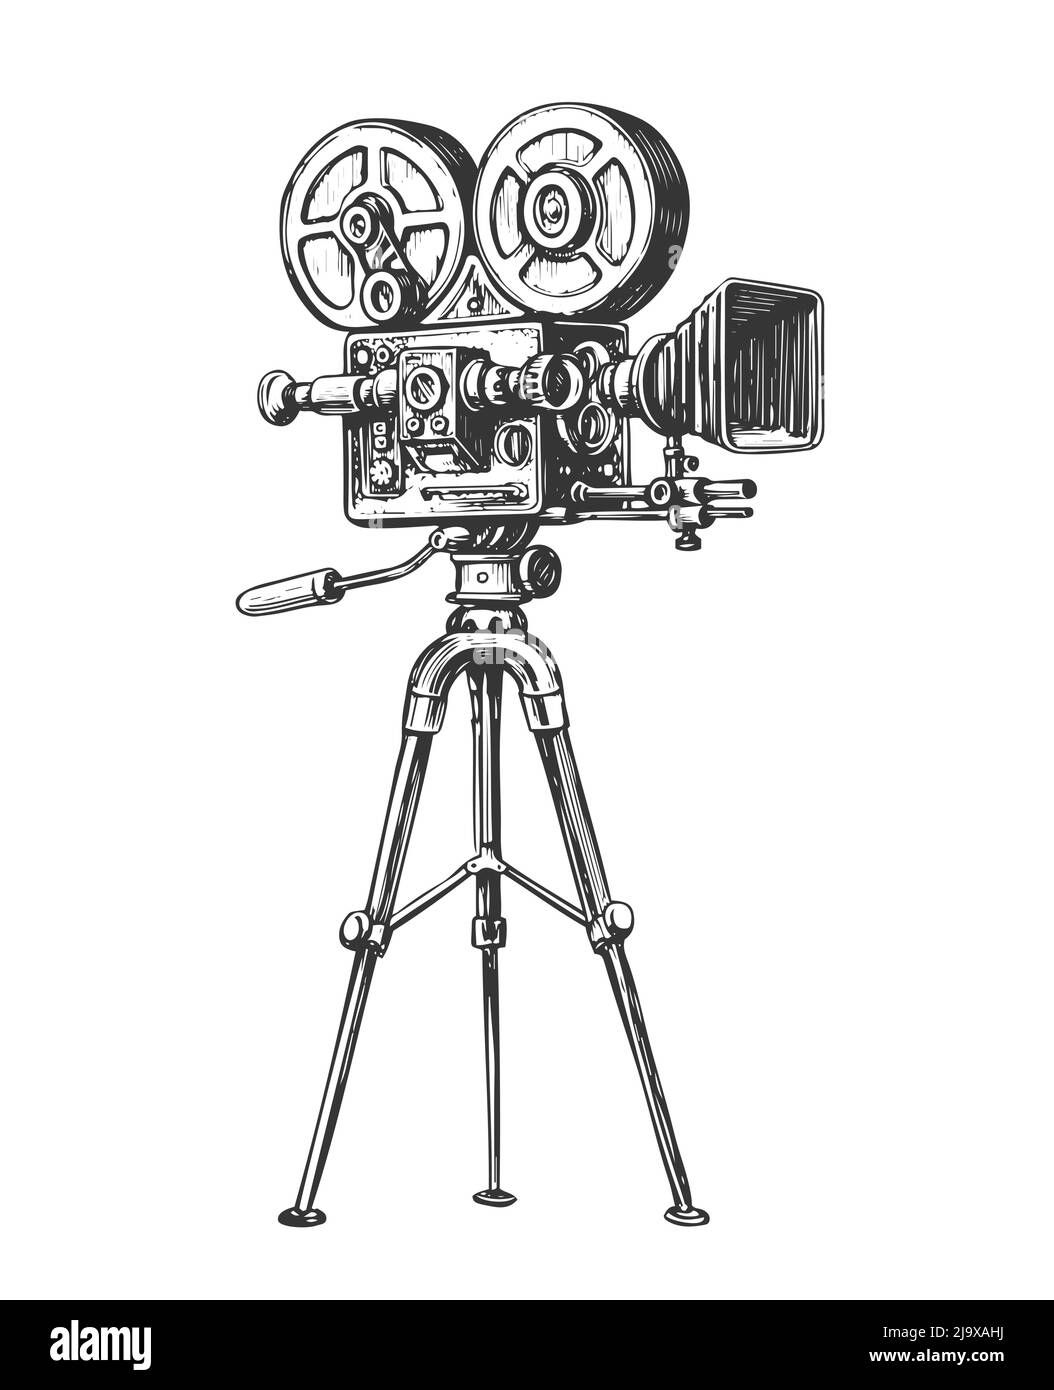 Retro-Filmkamera mit Film auf Stativen. Handgezeichnete Videokamera. Vintage-Vektorgrafik Stock Vektor